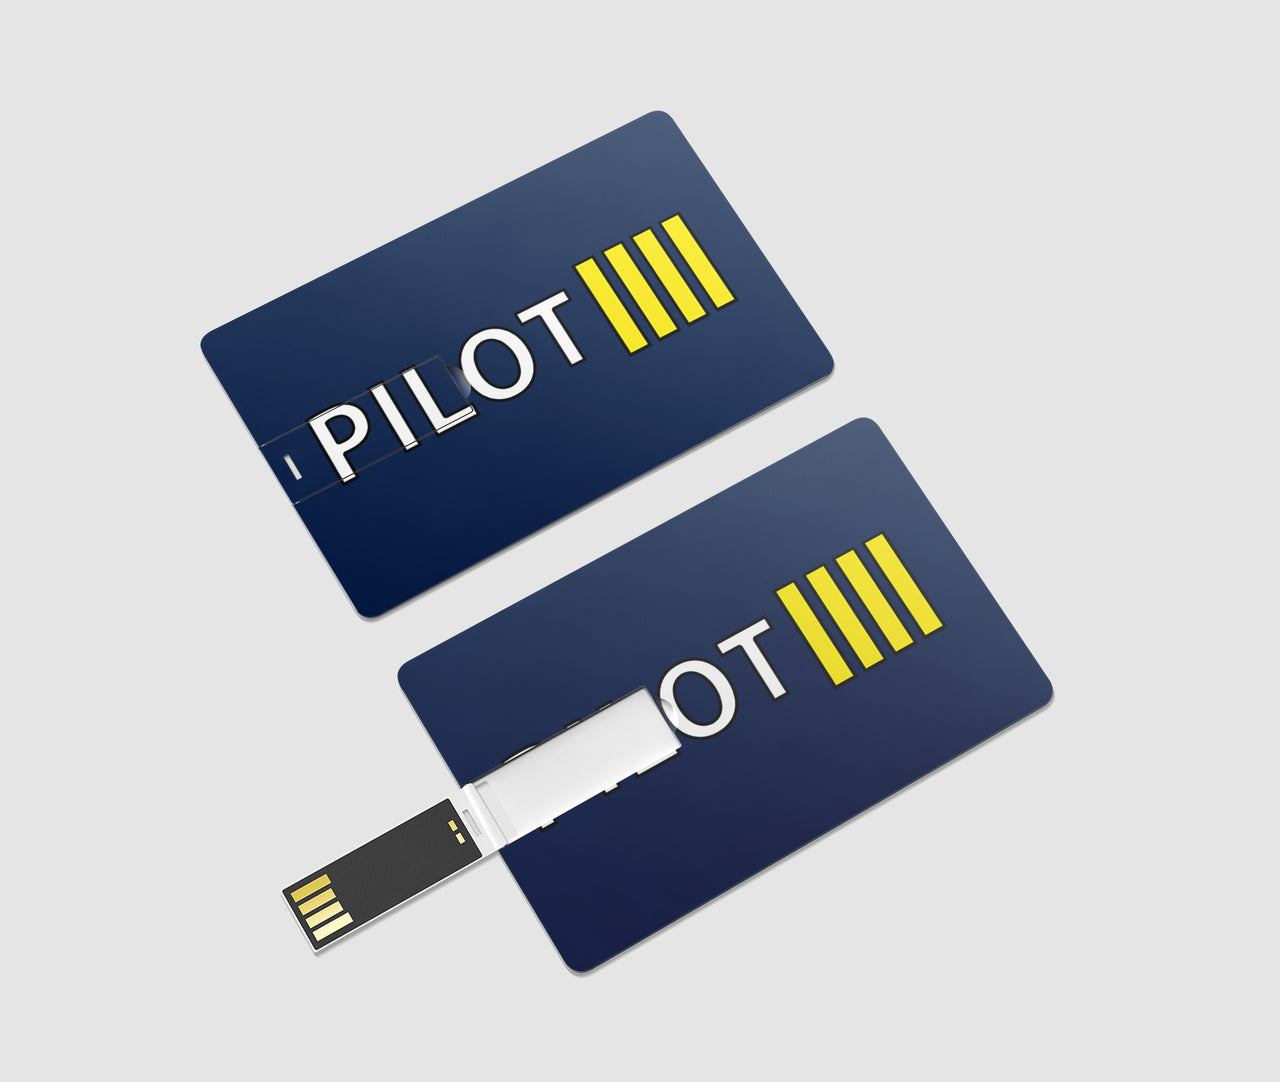 Pilot & Stripes (4 Lines) Designed USB Cards